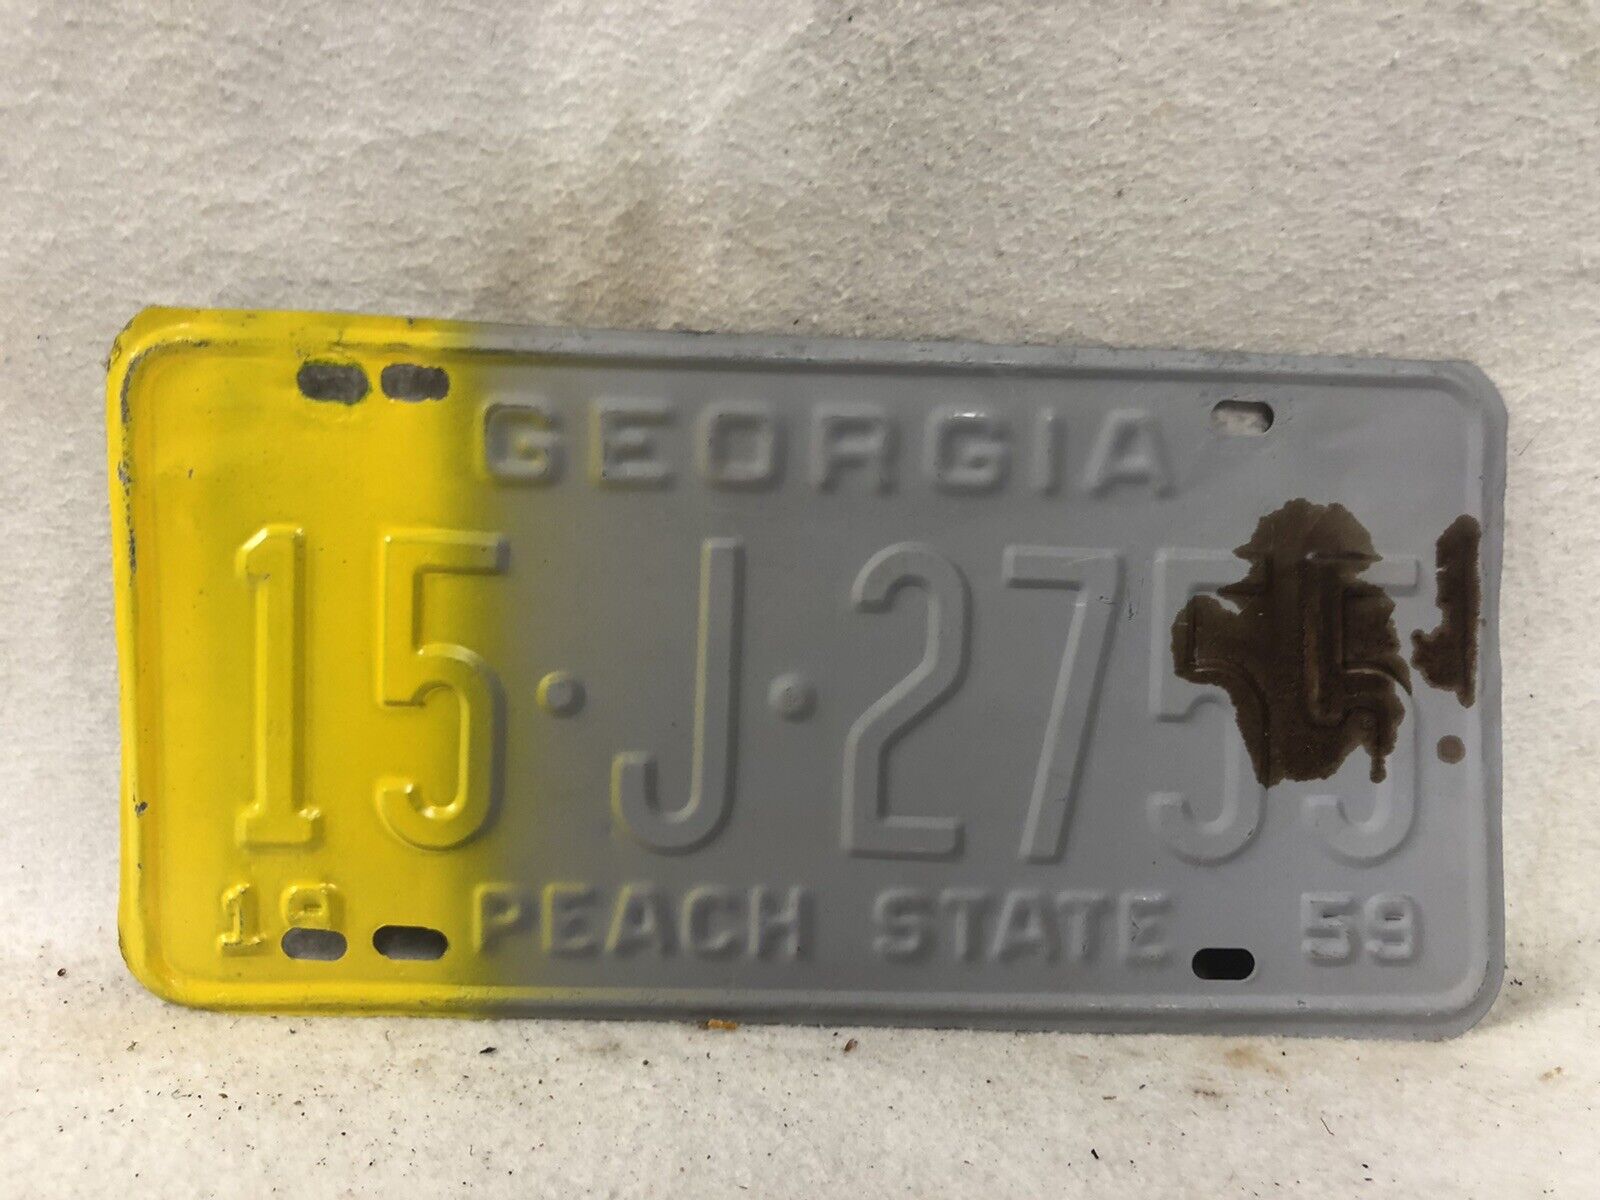 Vintage 1959 Georgia License Plate ~ Primed